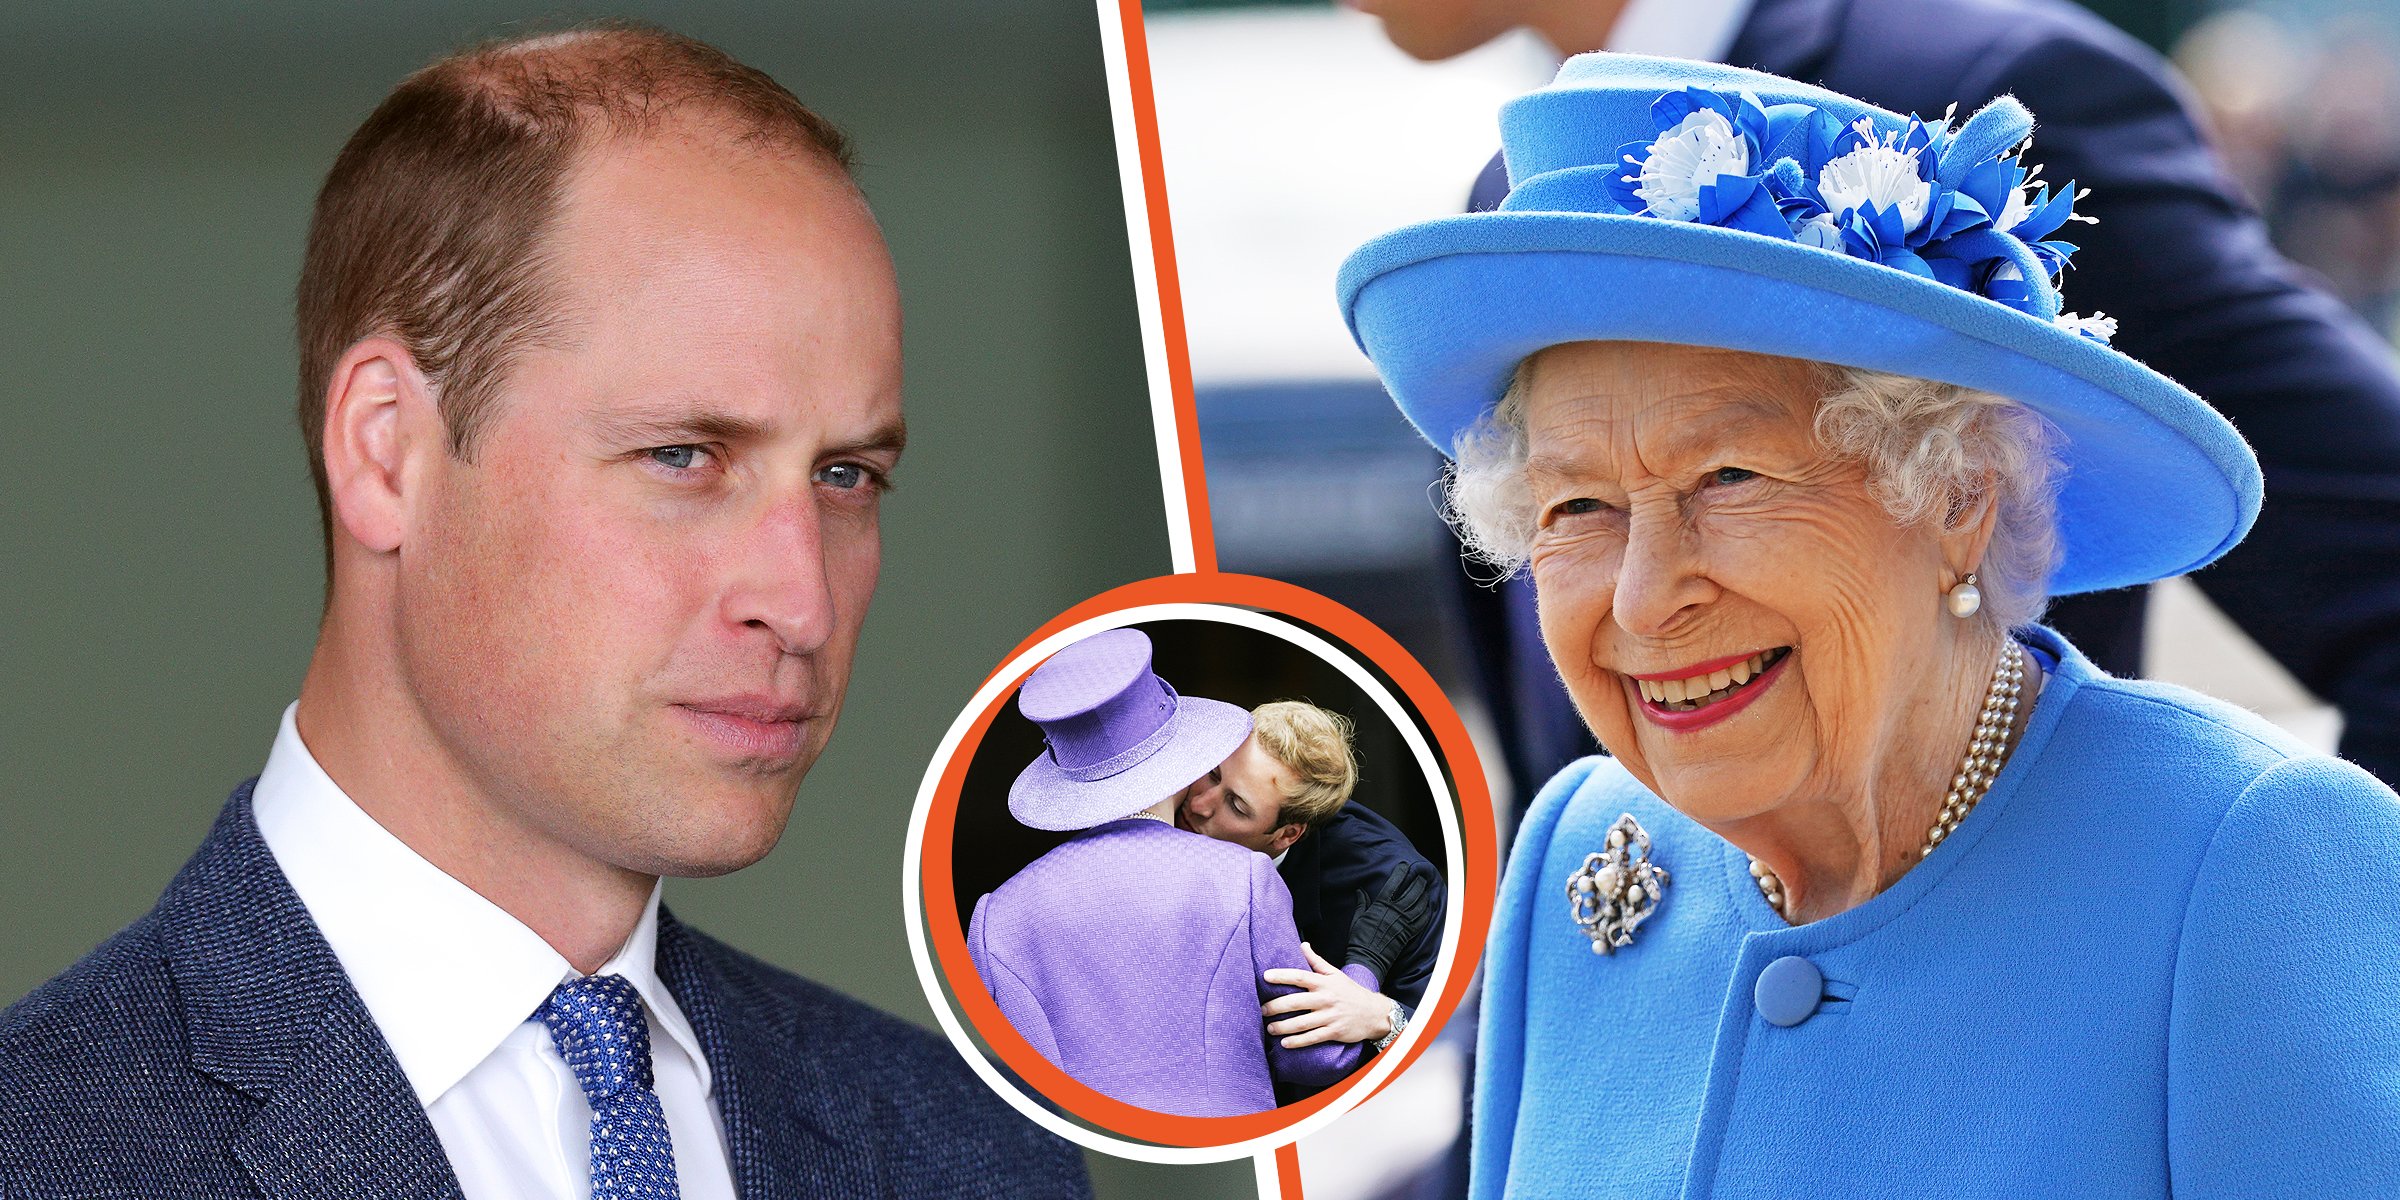 Prince William | Prince William kissing Queen Elizabeth II | Queen Elizabeth II | Source: Getty Images 